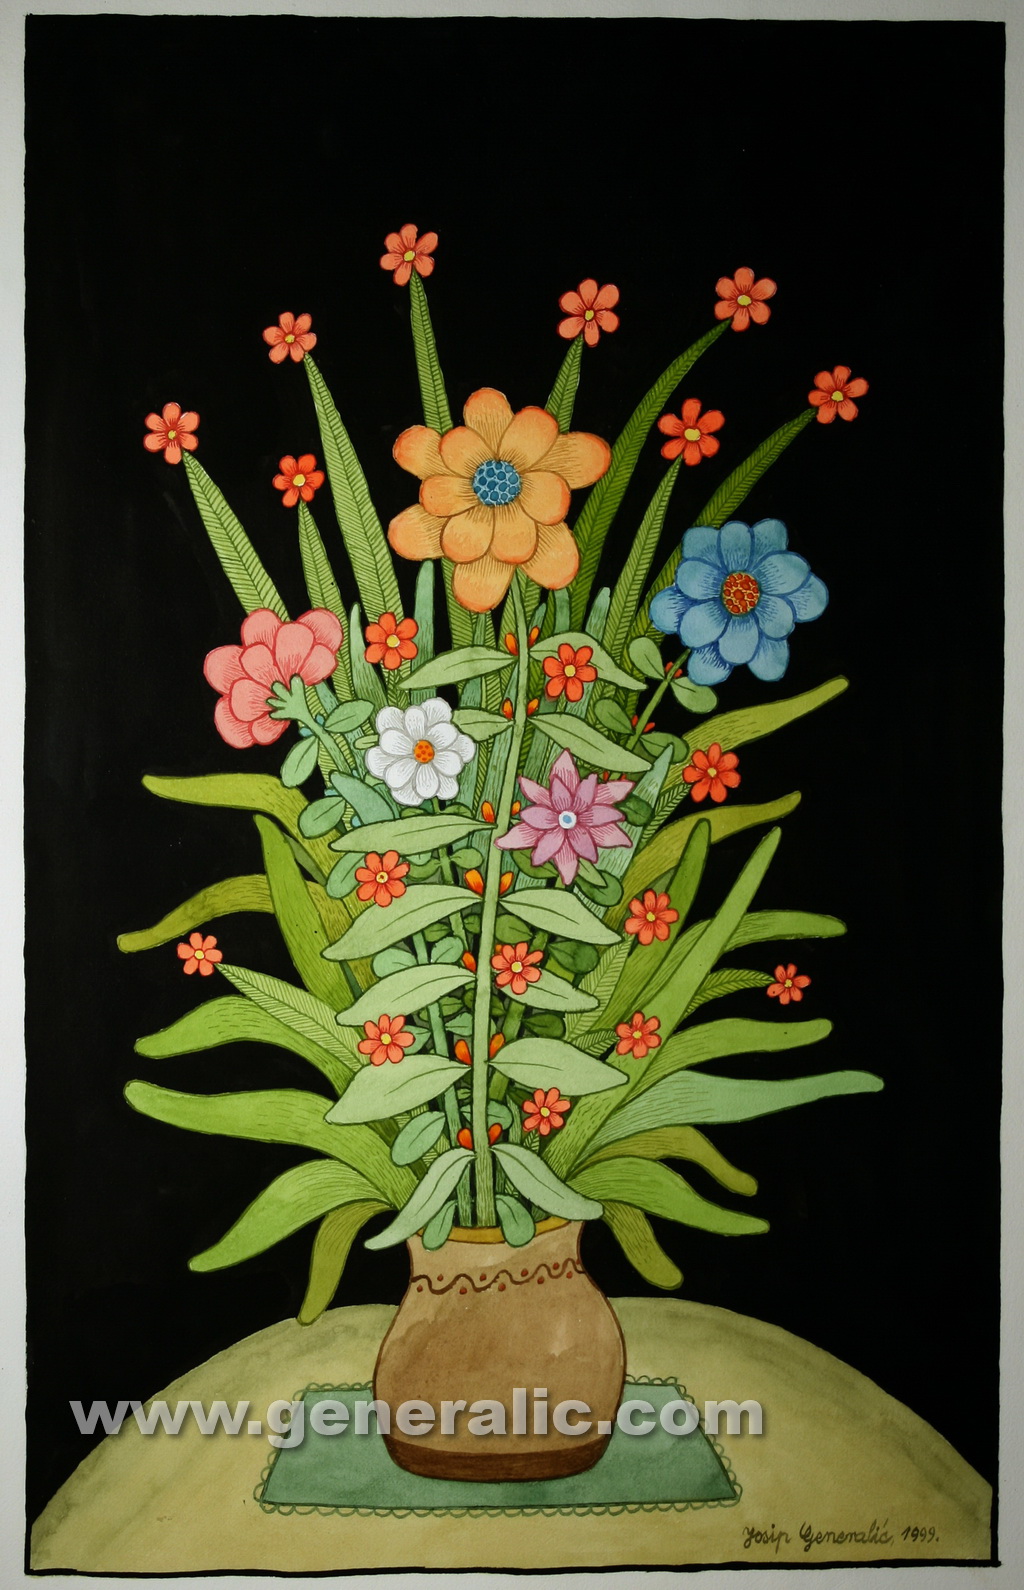 Josip Generalic, 1999, Flowers, watercolour, 69x43 cm